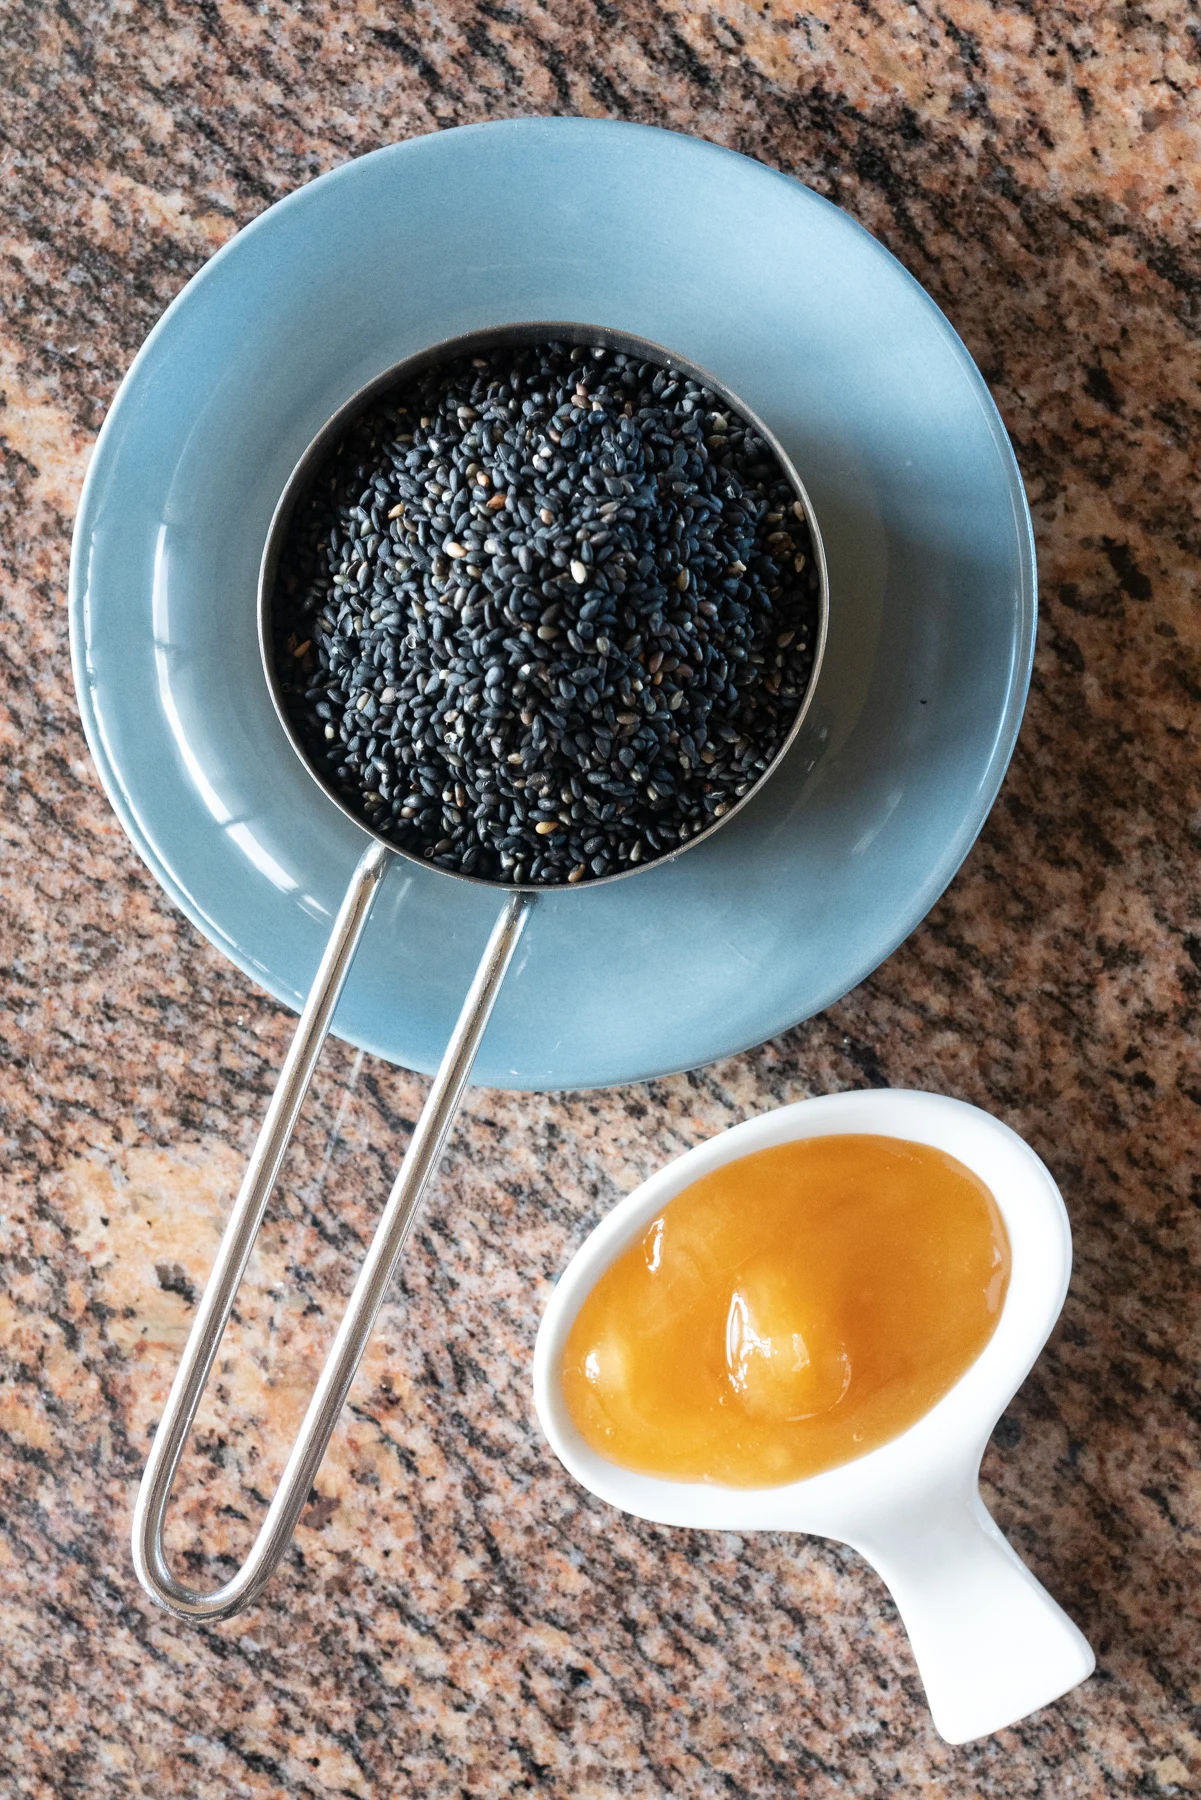 Roasted black sesame seeds and honey.